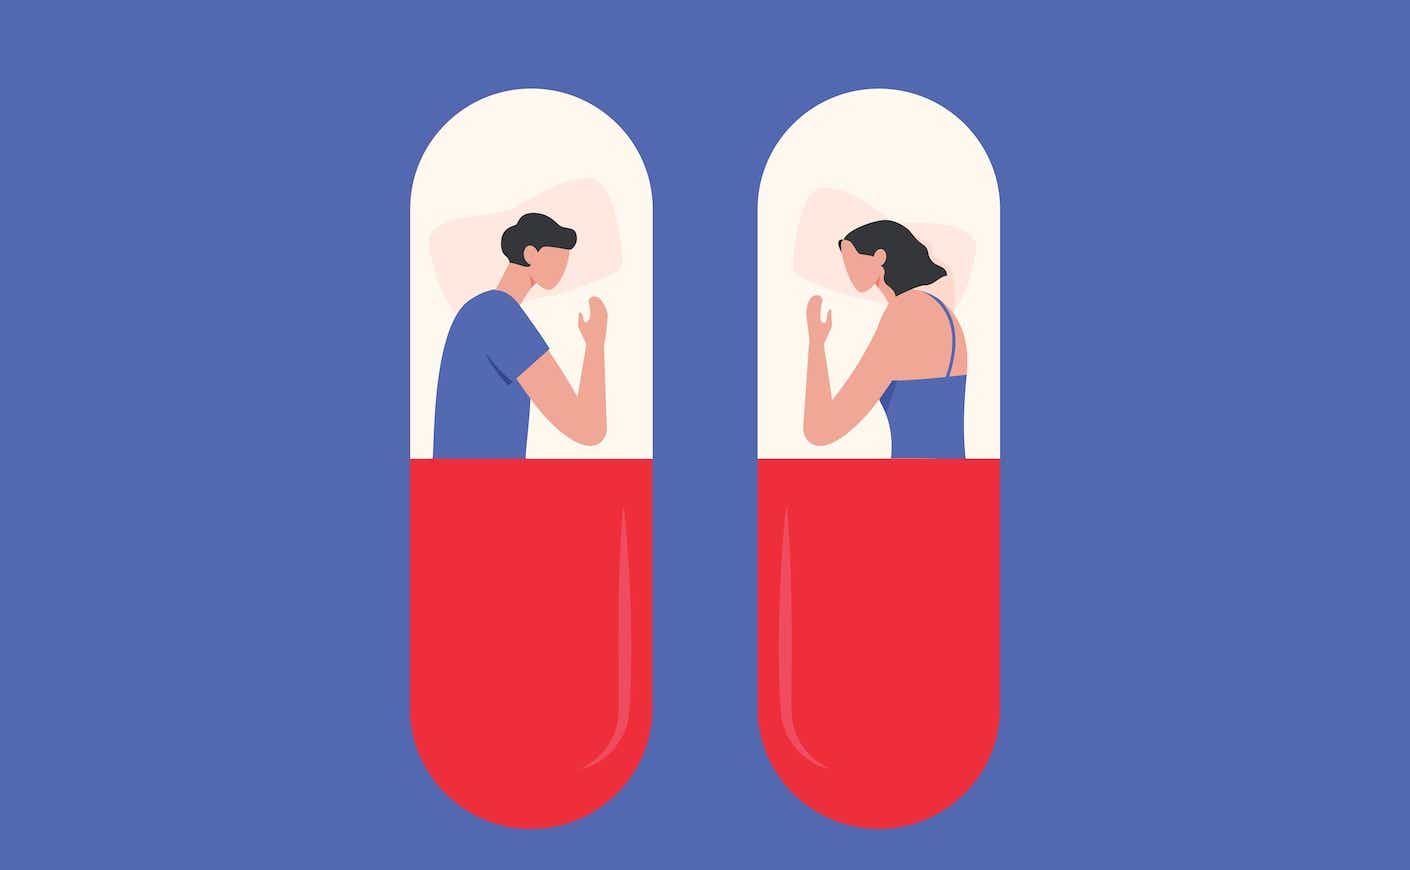 illustration of two people sleeping inside pills